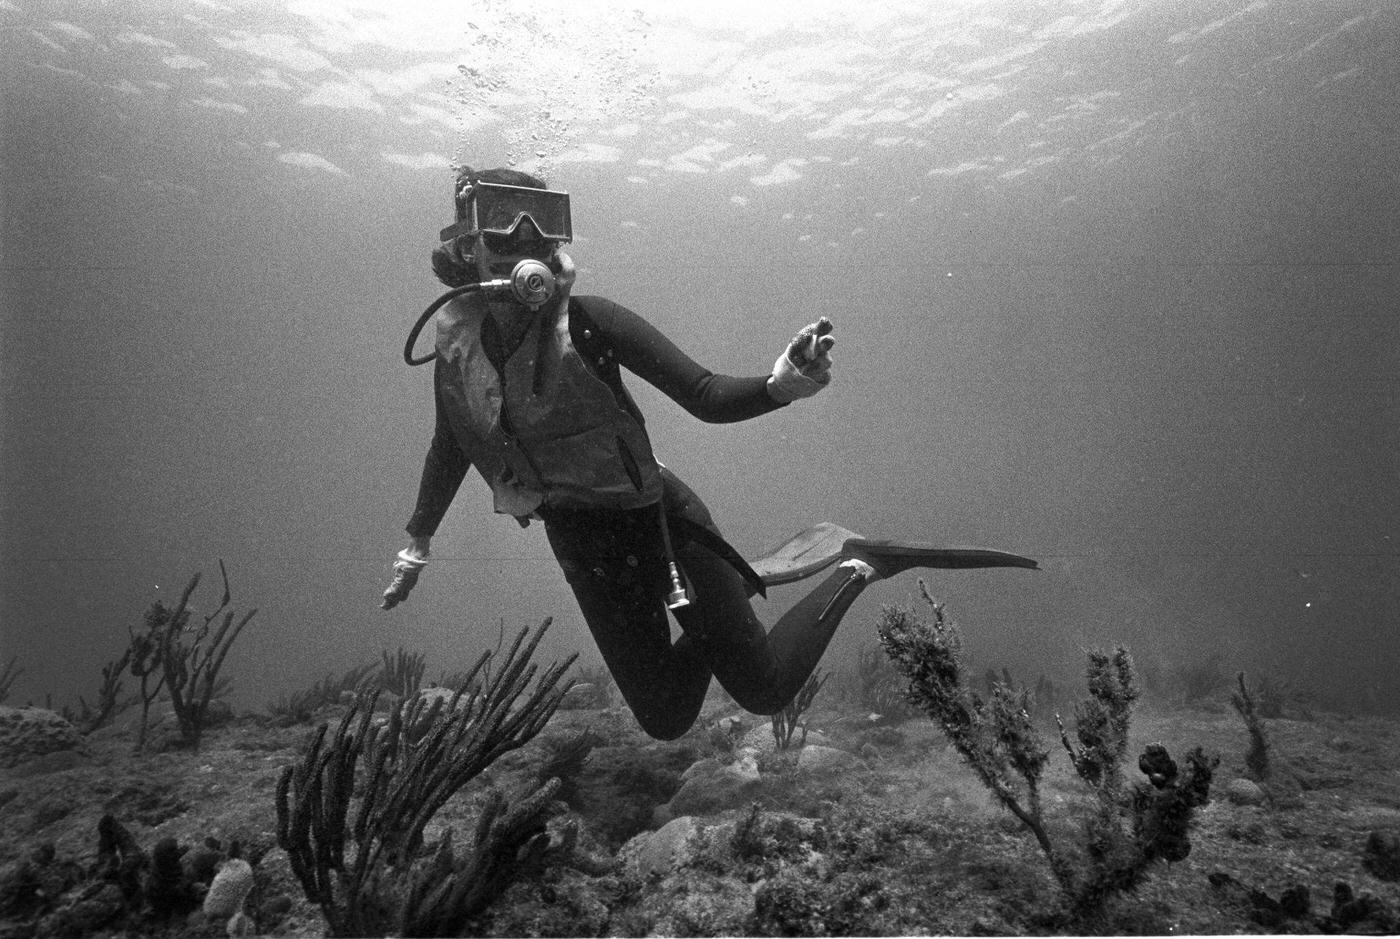 Scuba diver off the coast of Palm Beach, Florida